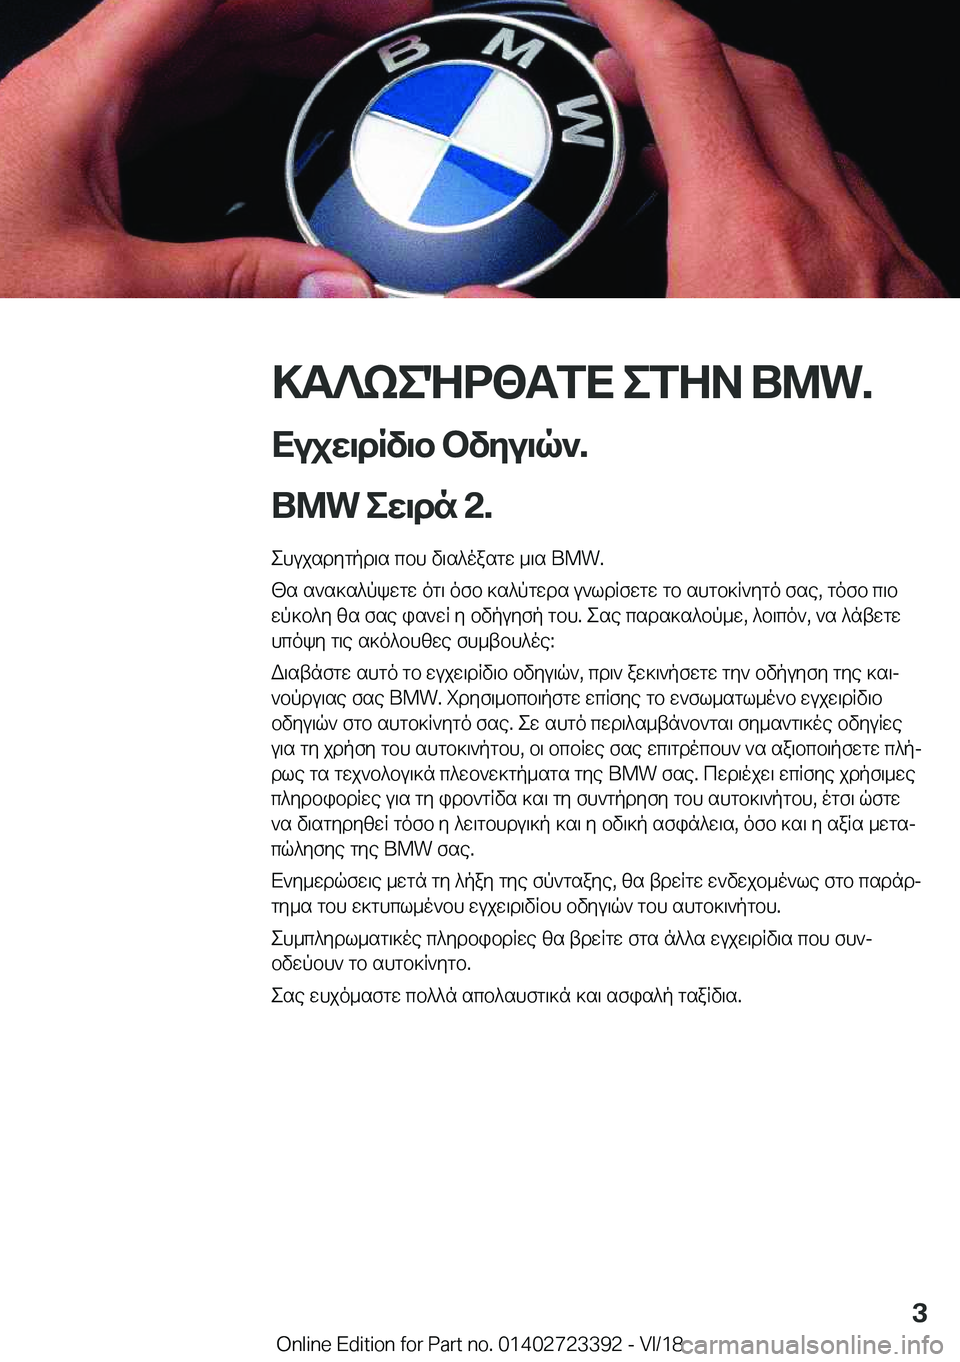 BMW 2 SERIES COUPE 2019  ΟΔΗΓΌΣ ΧΡΉΣΗΣ (in Greek) >T?keNd<TfX�efZA��B�M�W�.
Xujw\dRv\b�bvyu\q`�.
�B�M�W�ew\dn��2�.� ehujsdygpd\s�cbh�v\s^oasgw�_\s��B�M�W�.
[s�s`s]s^p